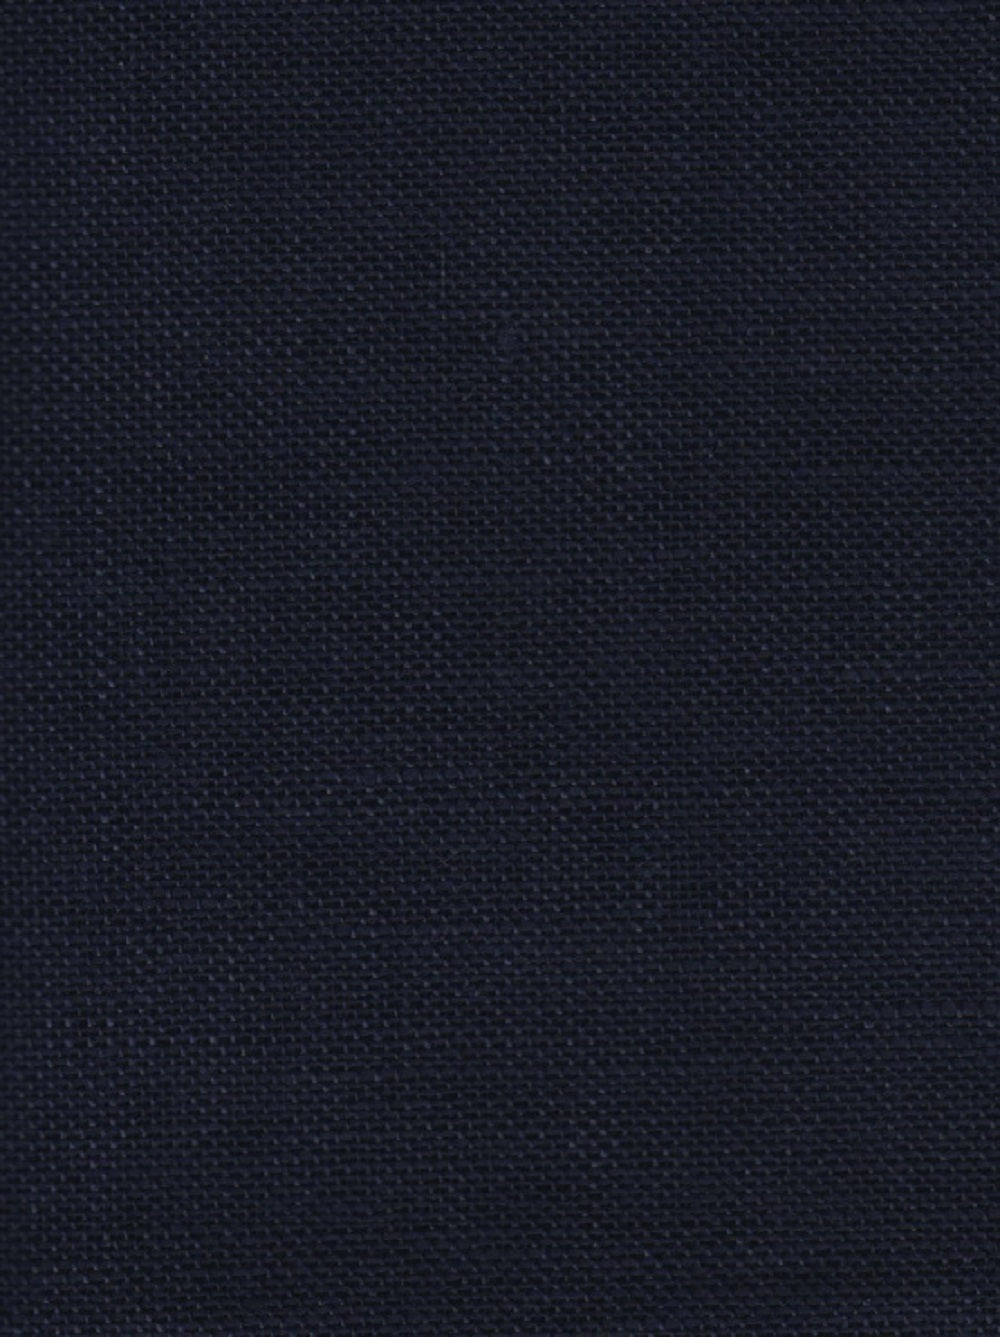 Wichelt Cashel 28ct 27x36 Navy cross stitch Fabric